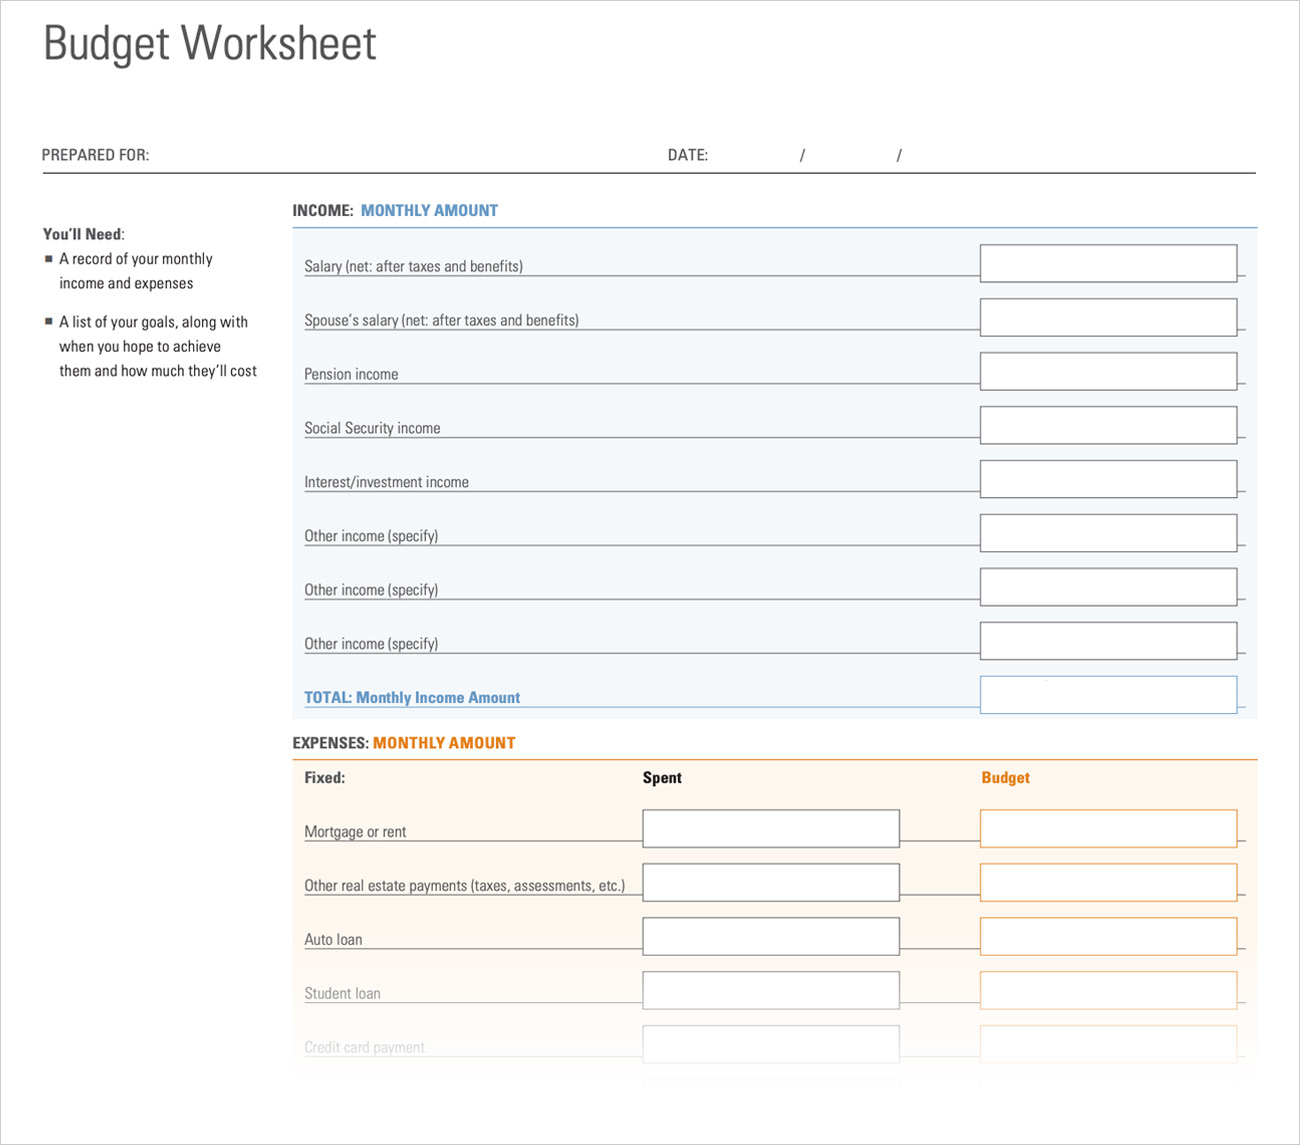 Budget Worksheet  Morningstar Throughout Personal Net Worth Worksheet